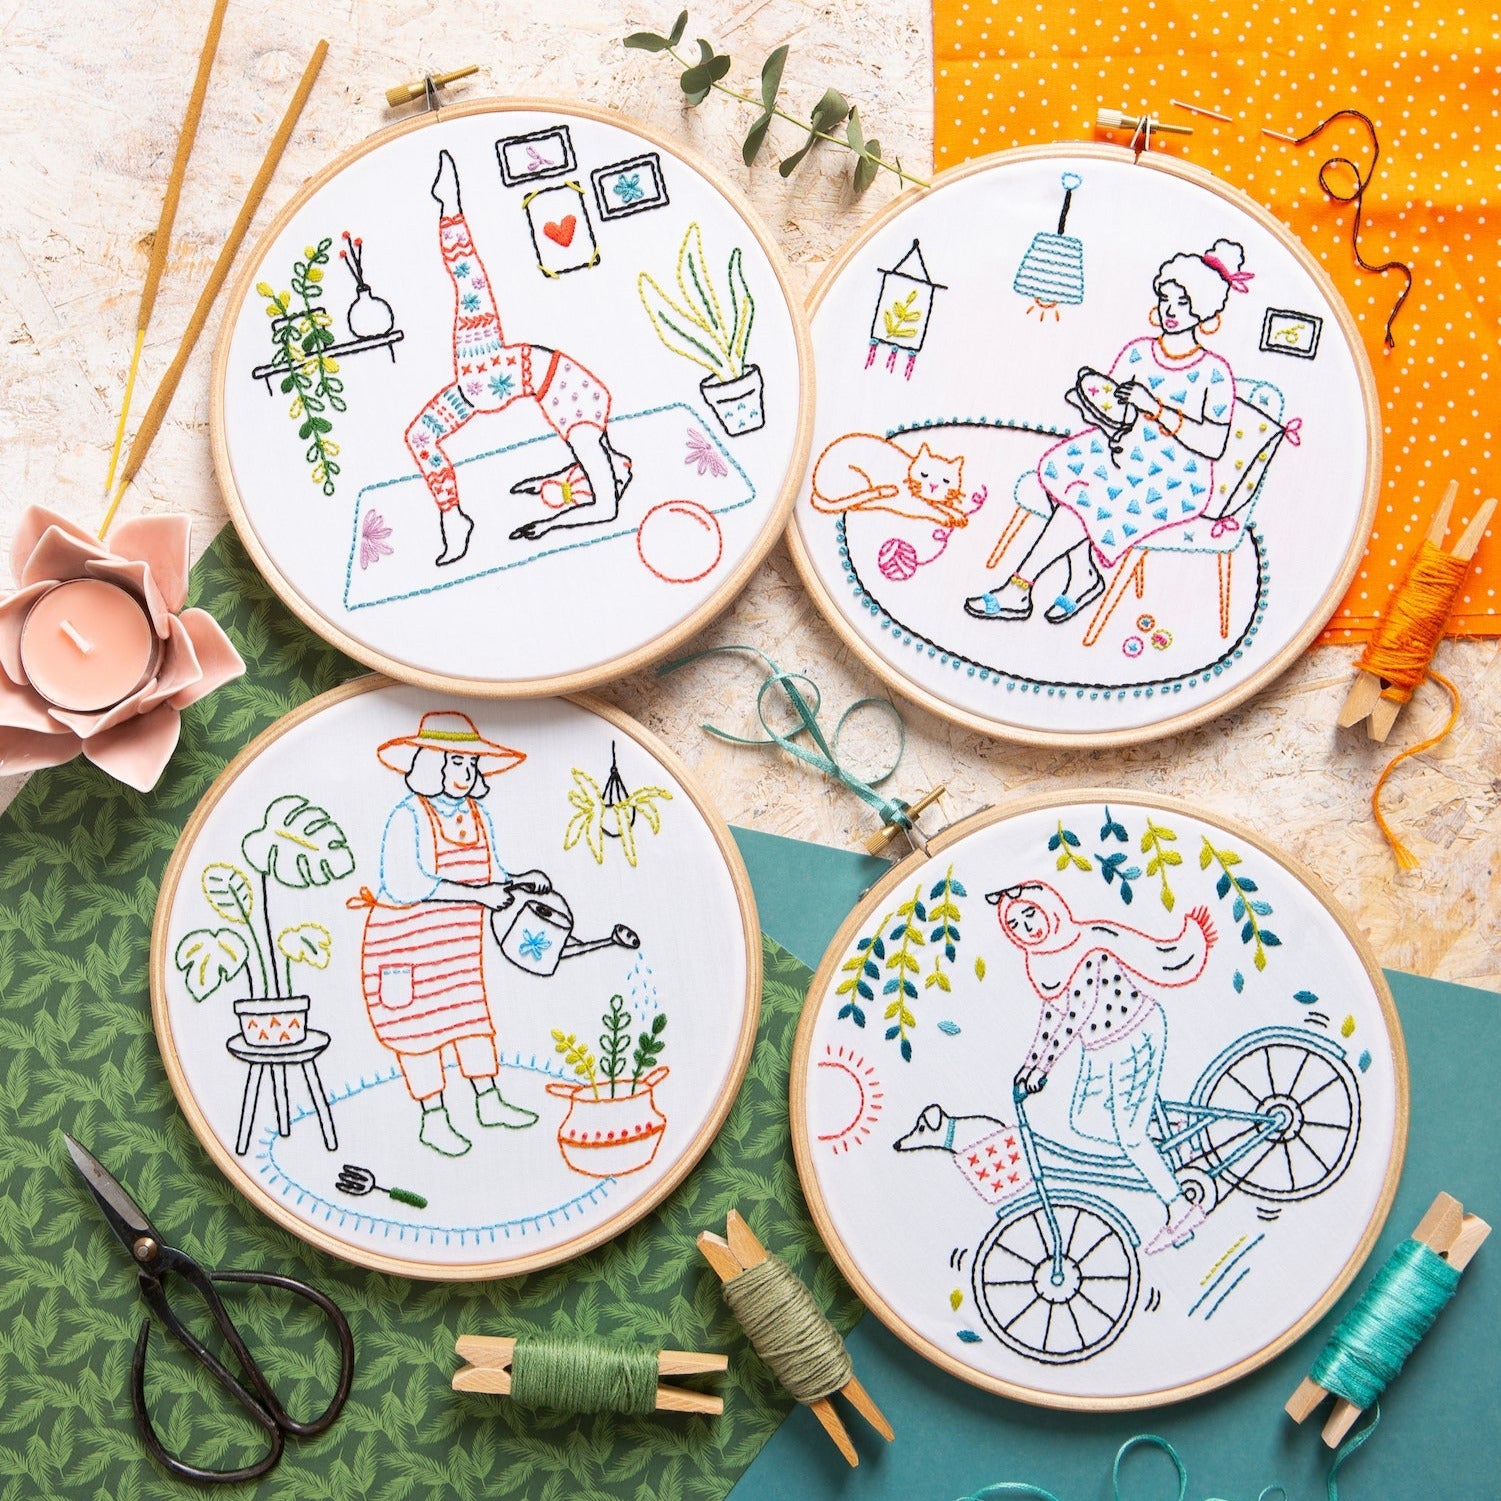 Town Houses Mini Embroidery Kit - Hawthorn Handmade - Embroidery Kit